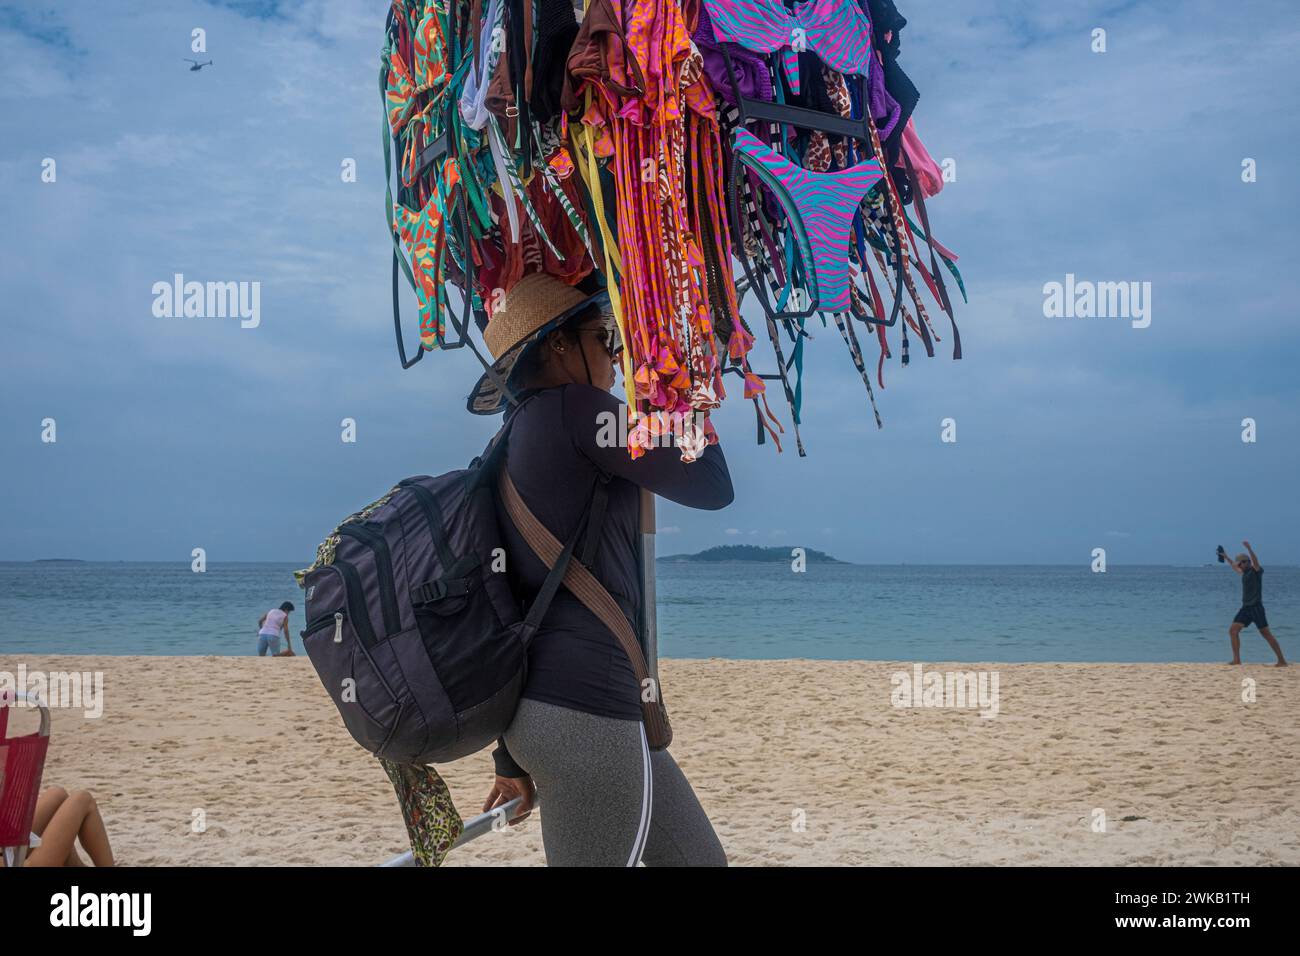 Beach vendor sells colorful bikinis at Ipanema beach, Rio de Janeiro, Brazil. Stock Photo